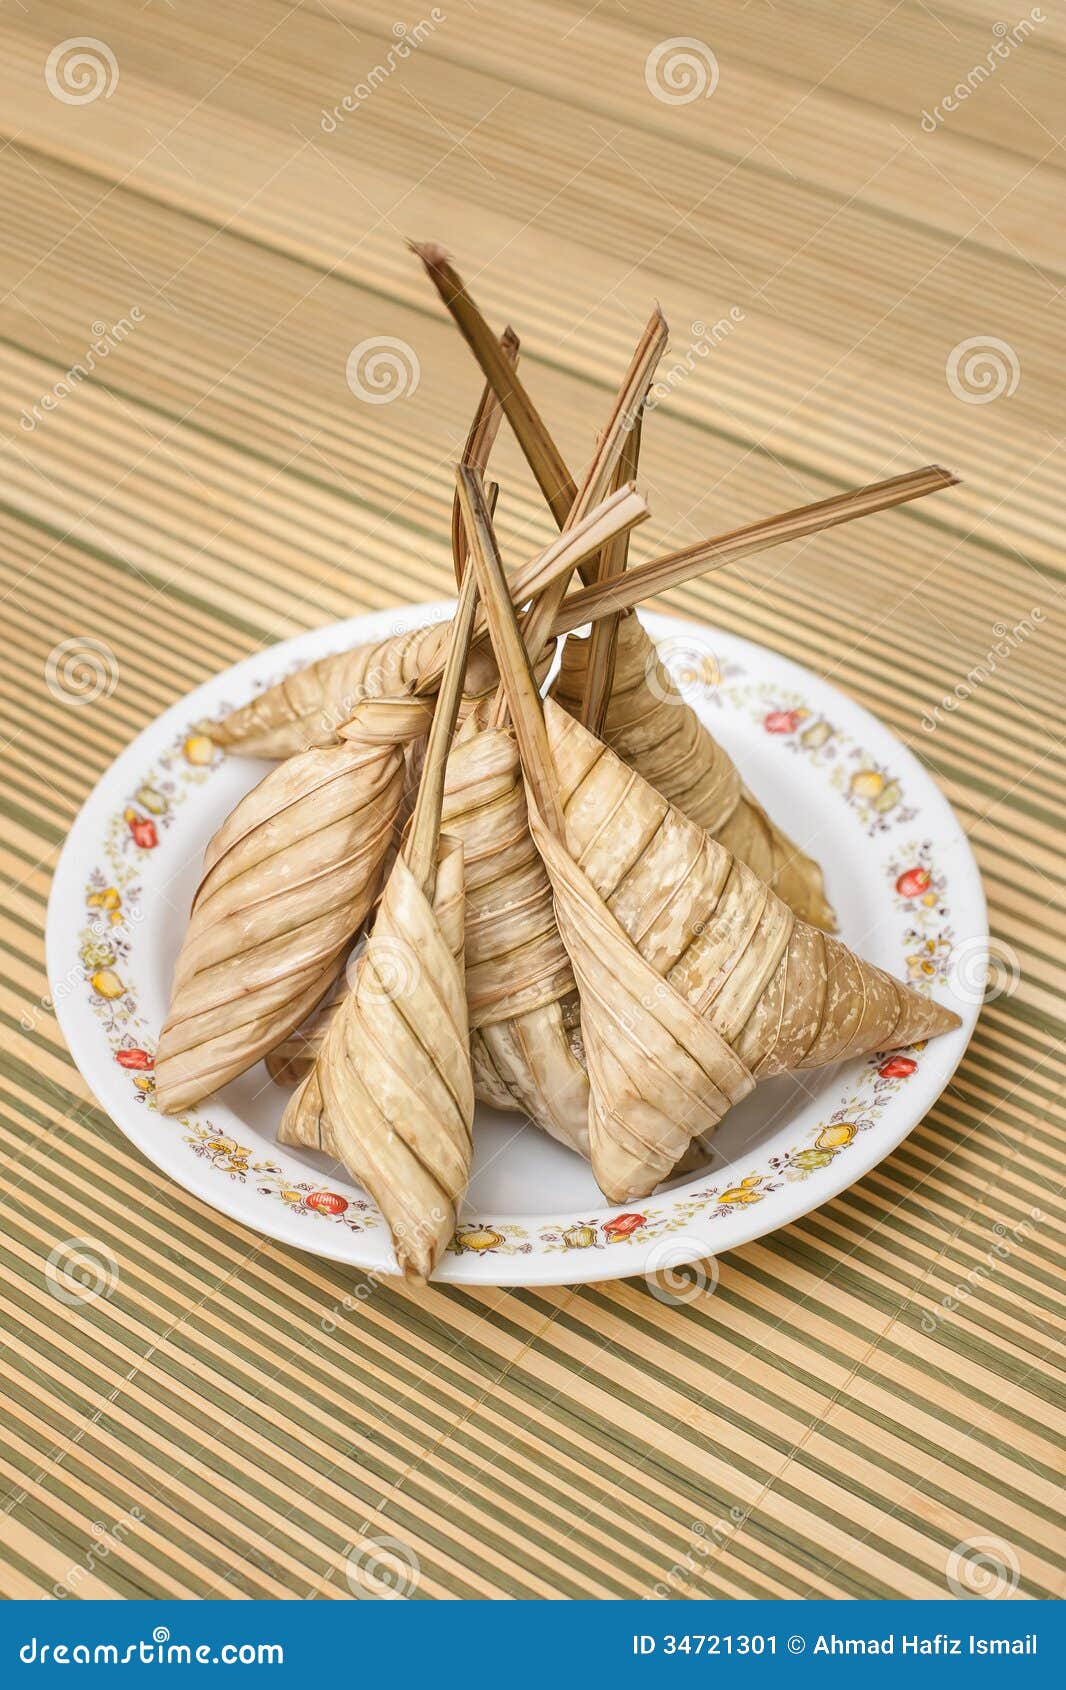 delicious ketupat daun palas ready to eat on eid festival